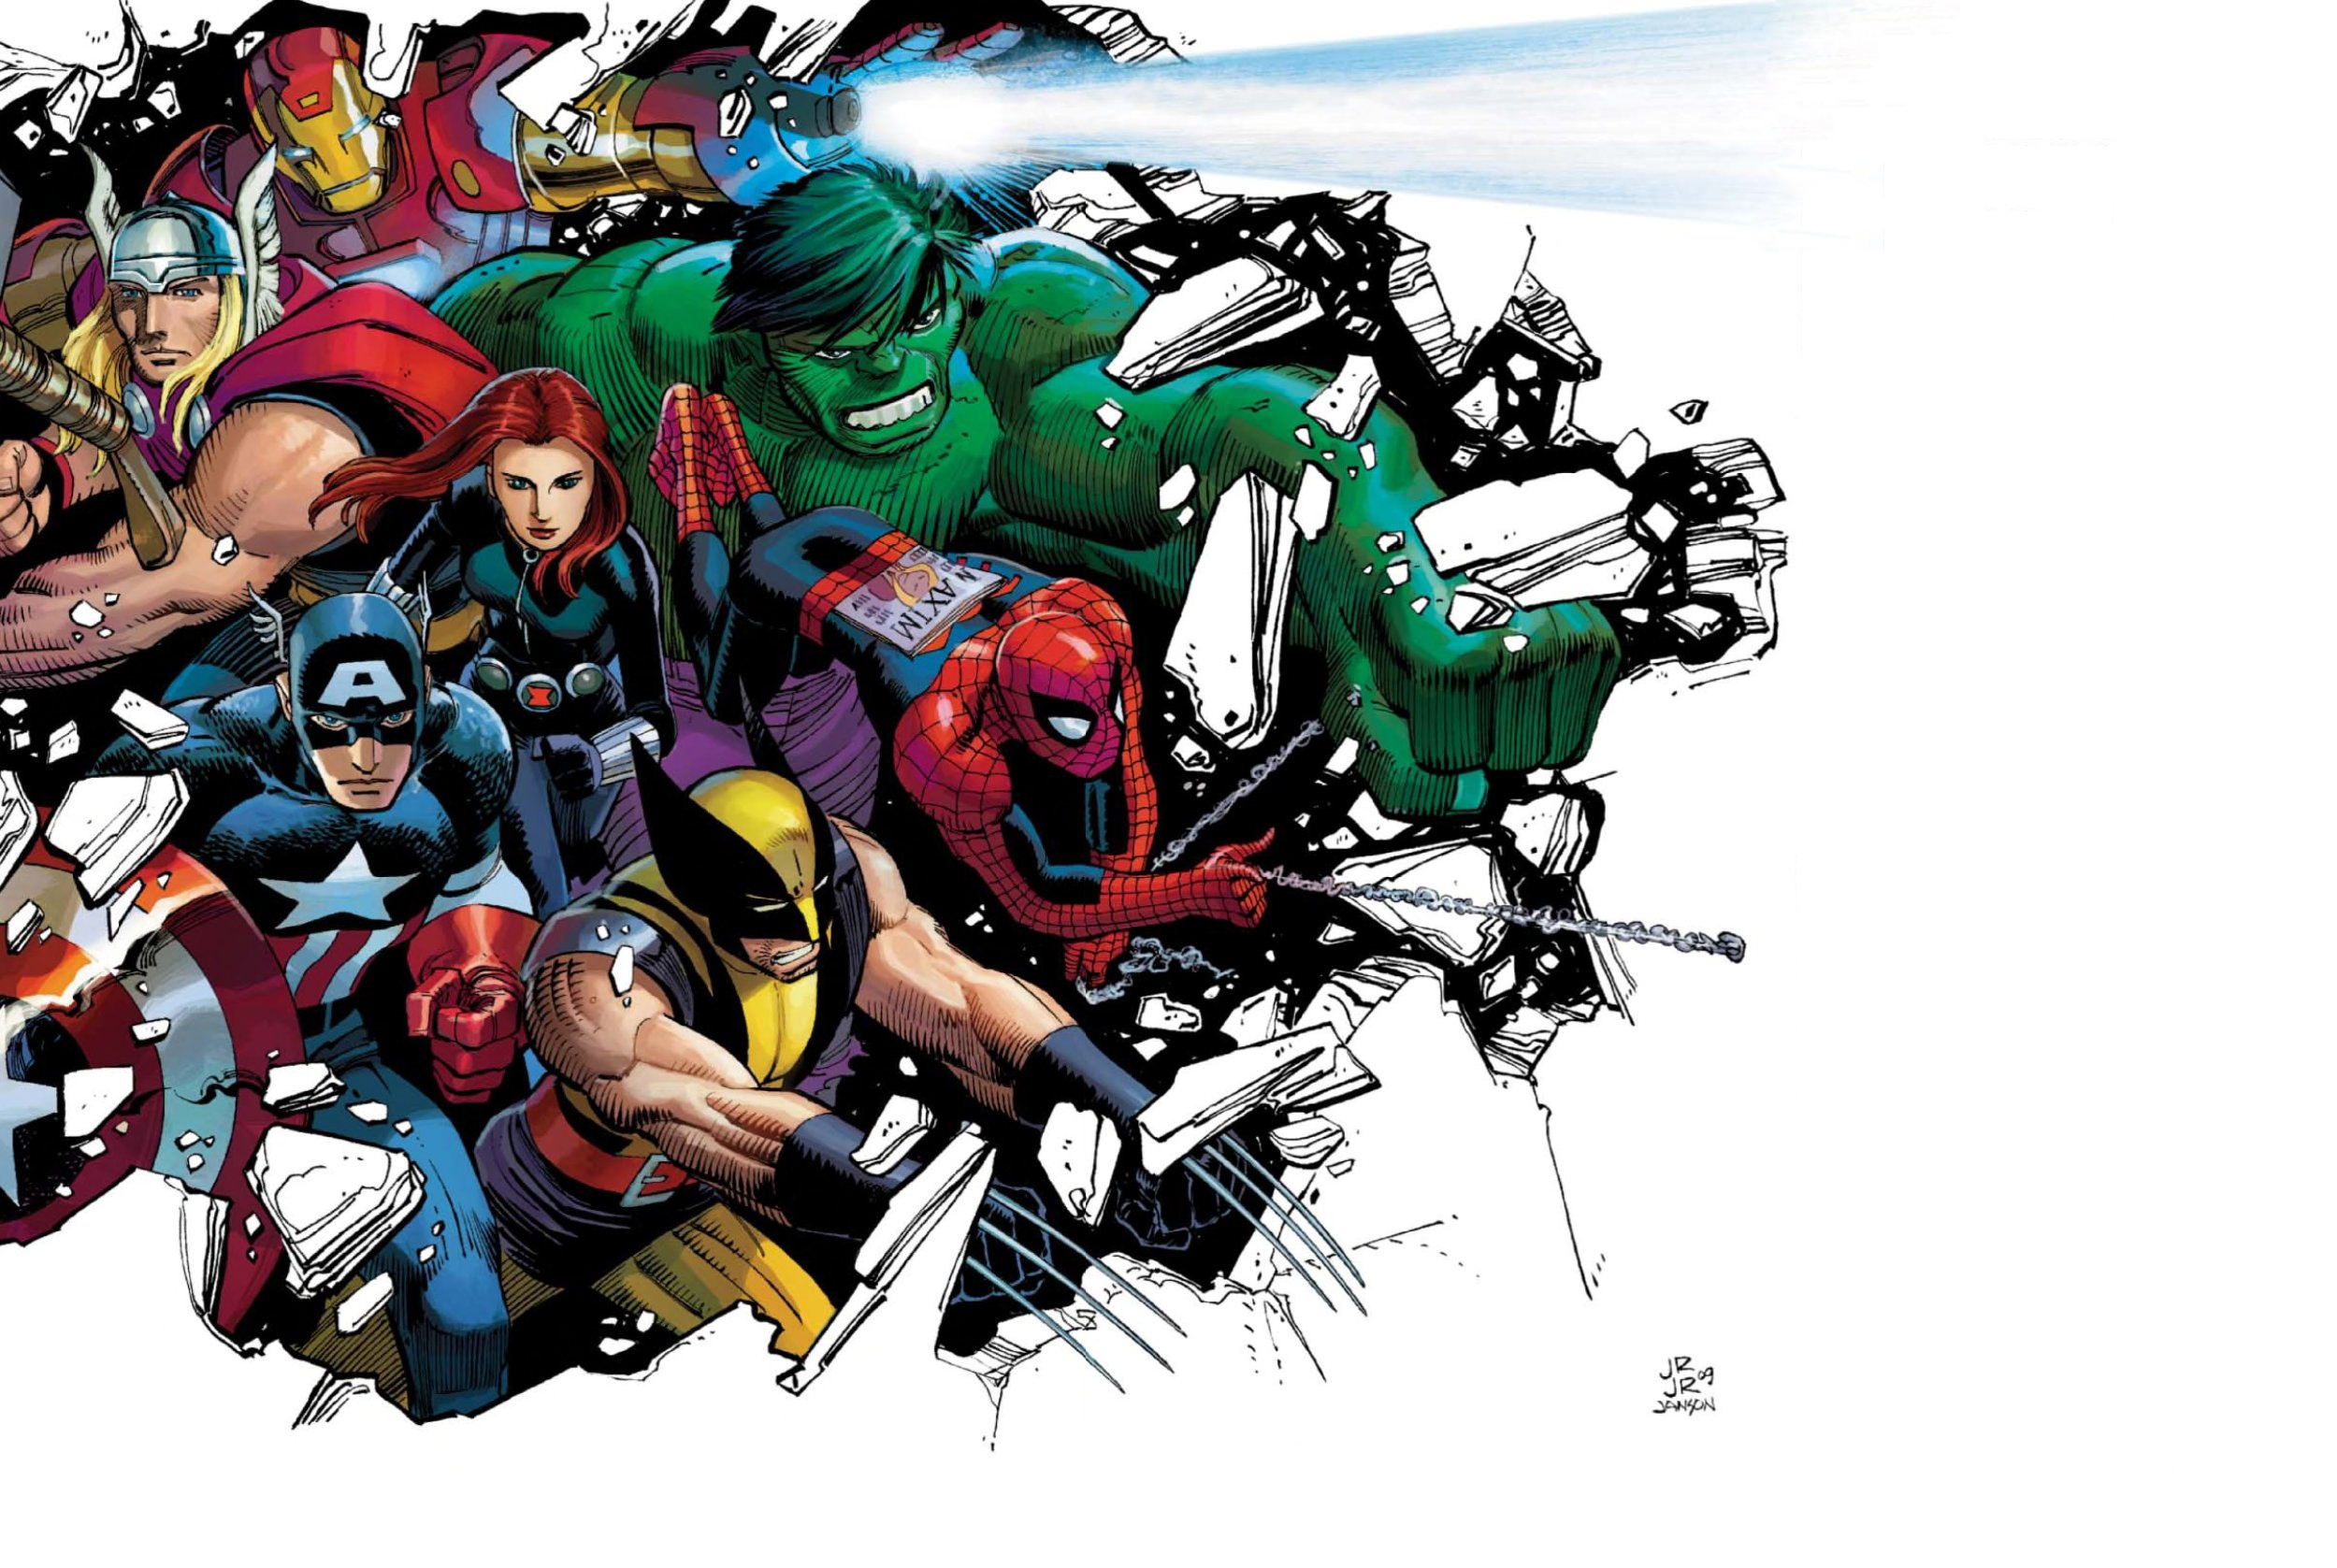 Marvel superheroes unite: Captain America, Hulk, Wolverine, Spider-Man, Iron Man, Thor, Black Widow.